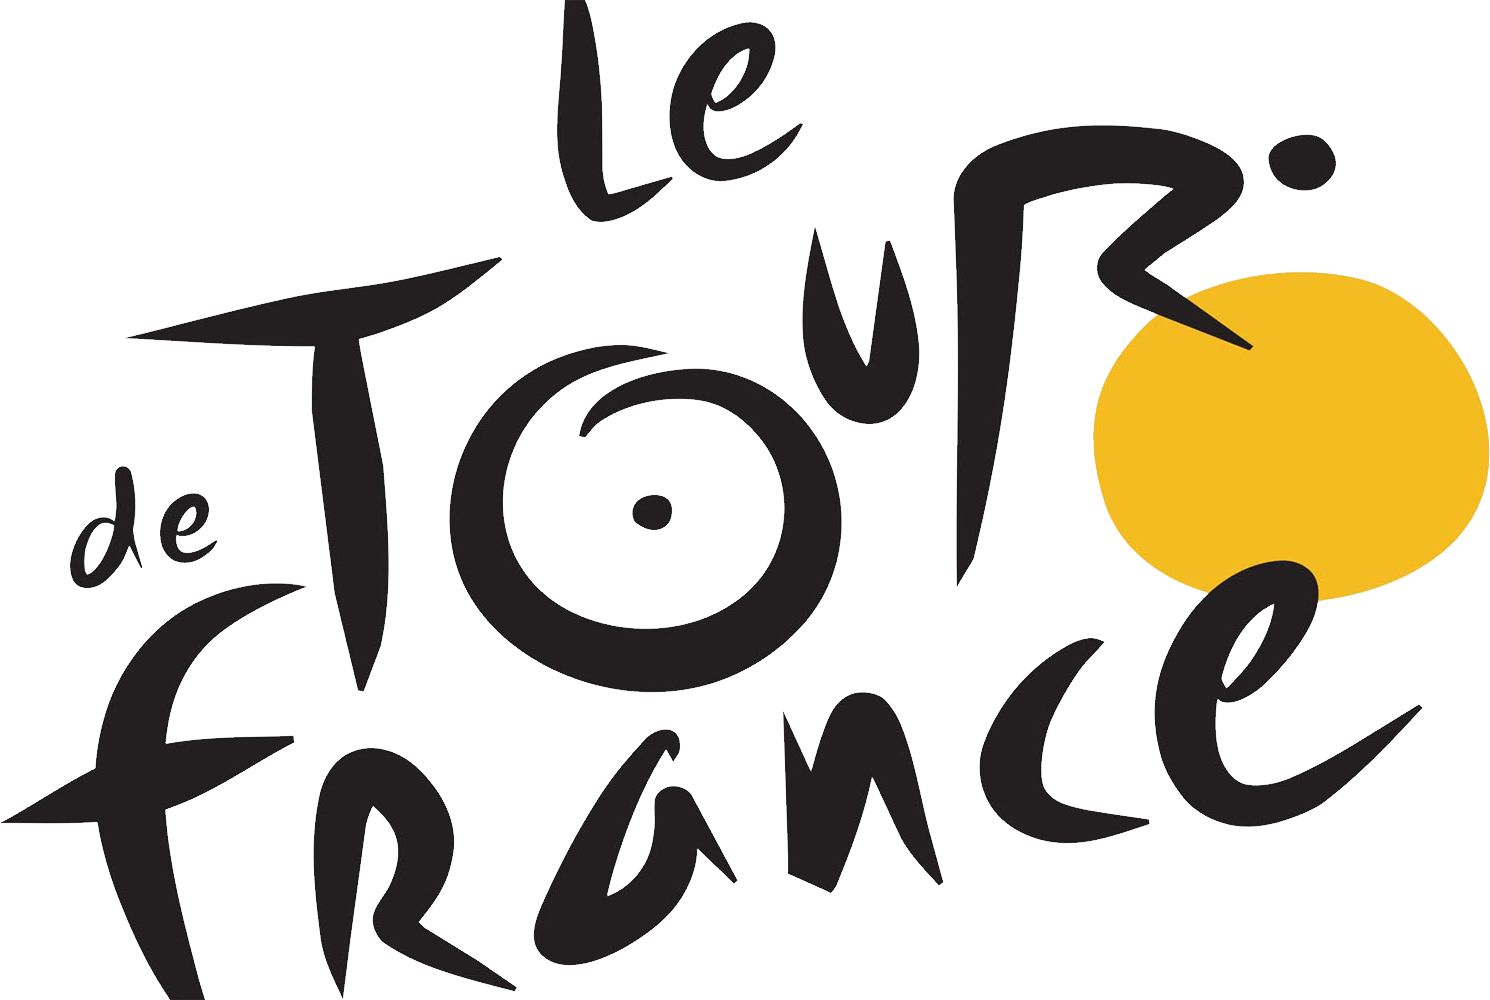 Biểu trưng của Tour de France